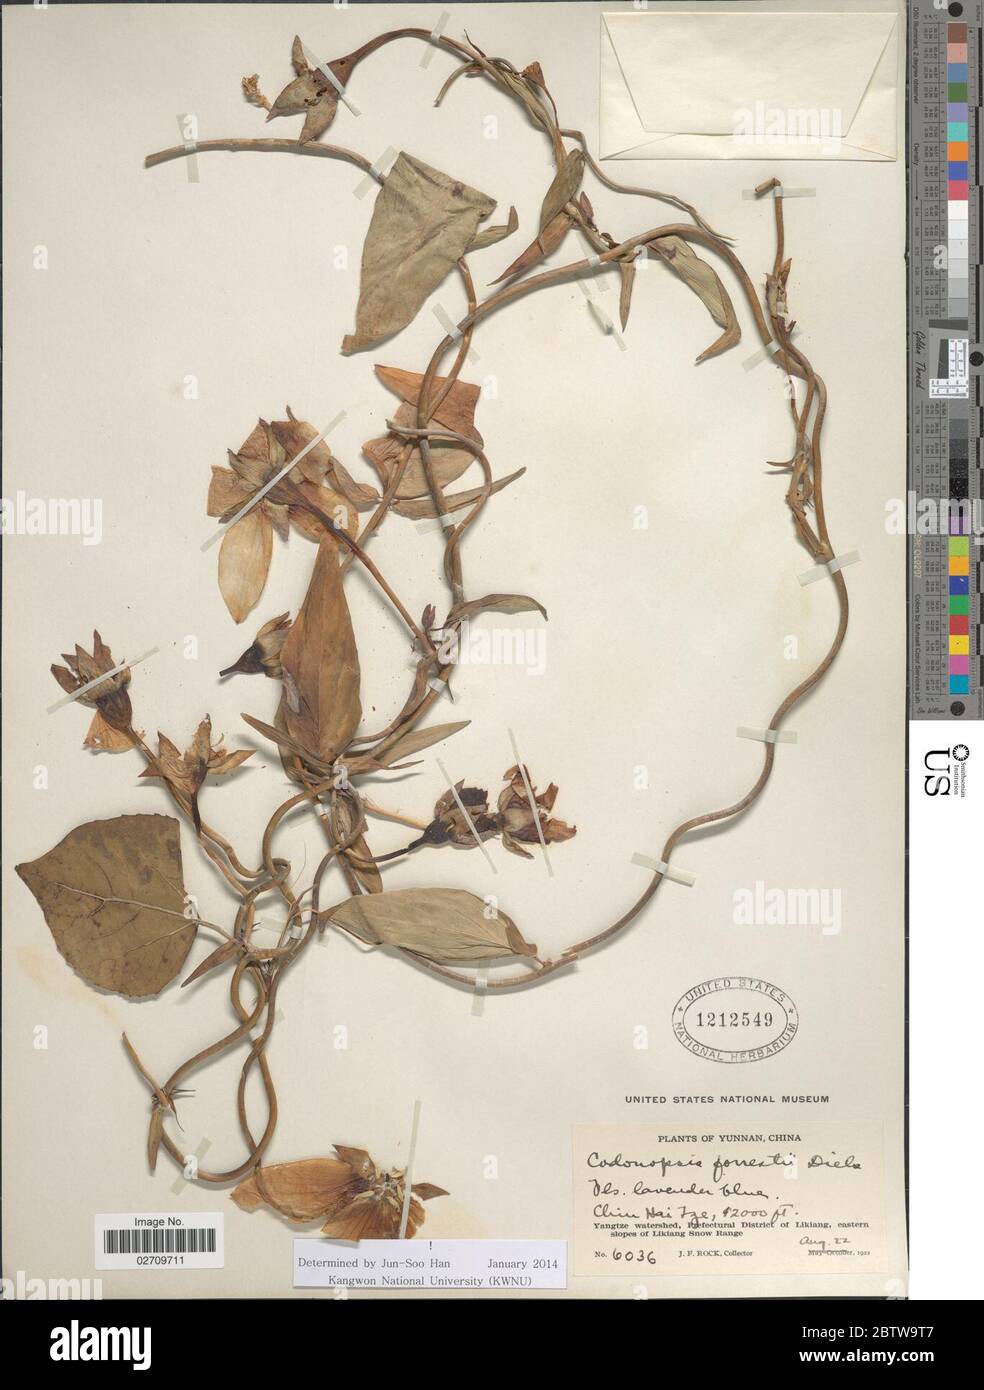 Codonopsis forrestii Diels. Stock Photo